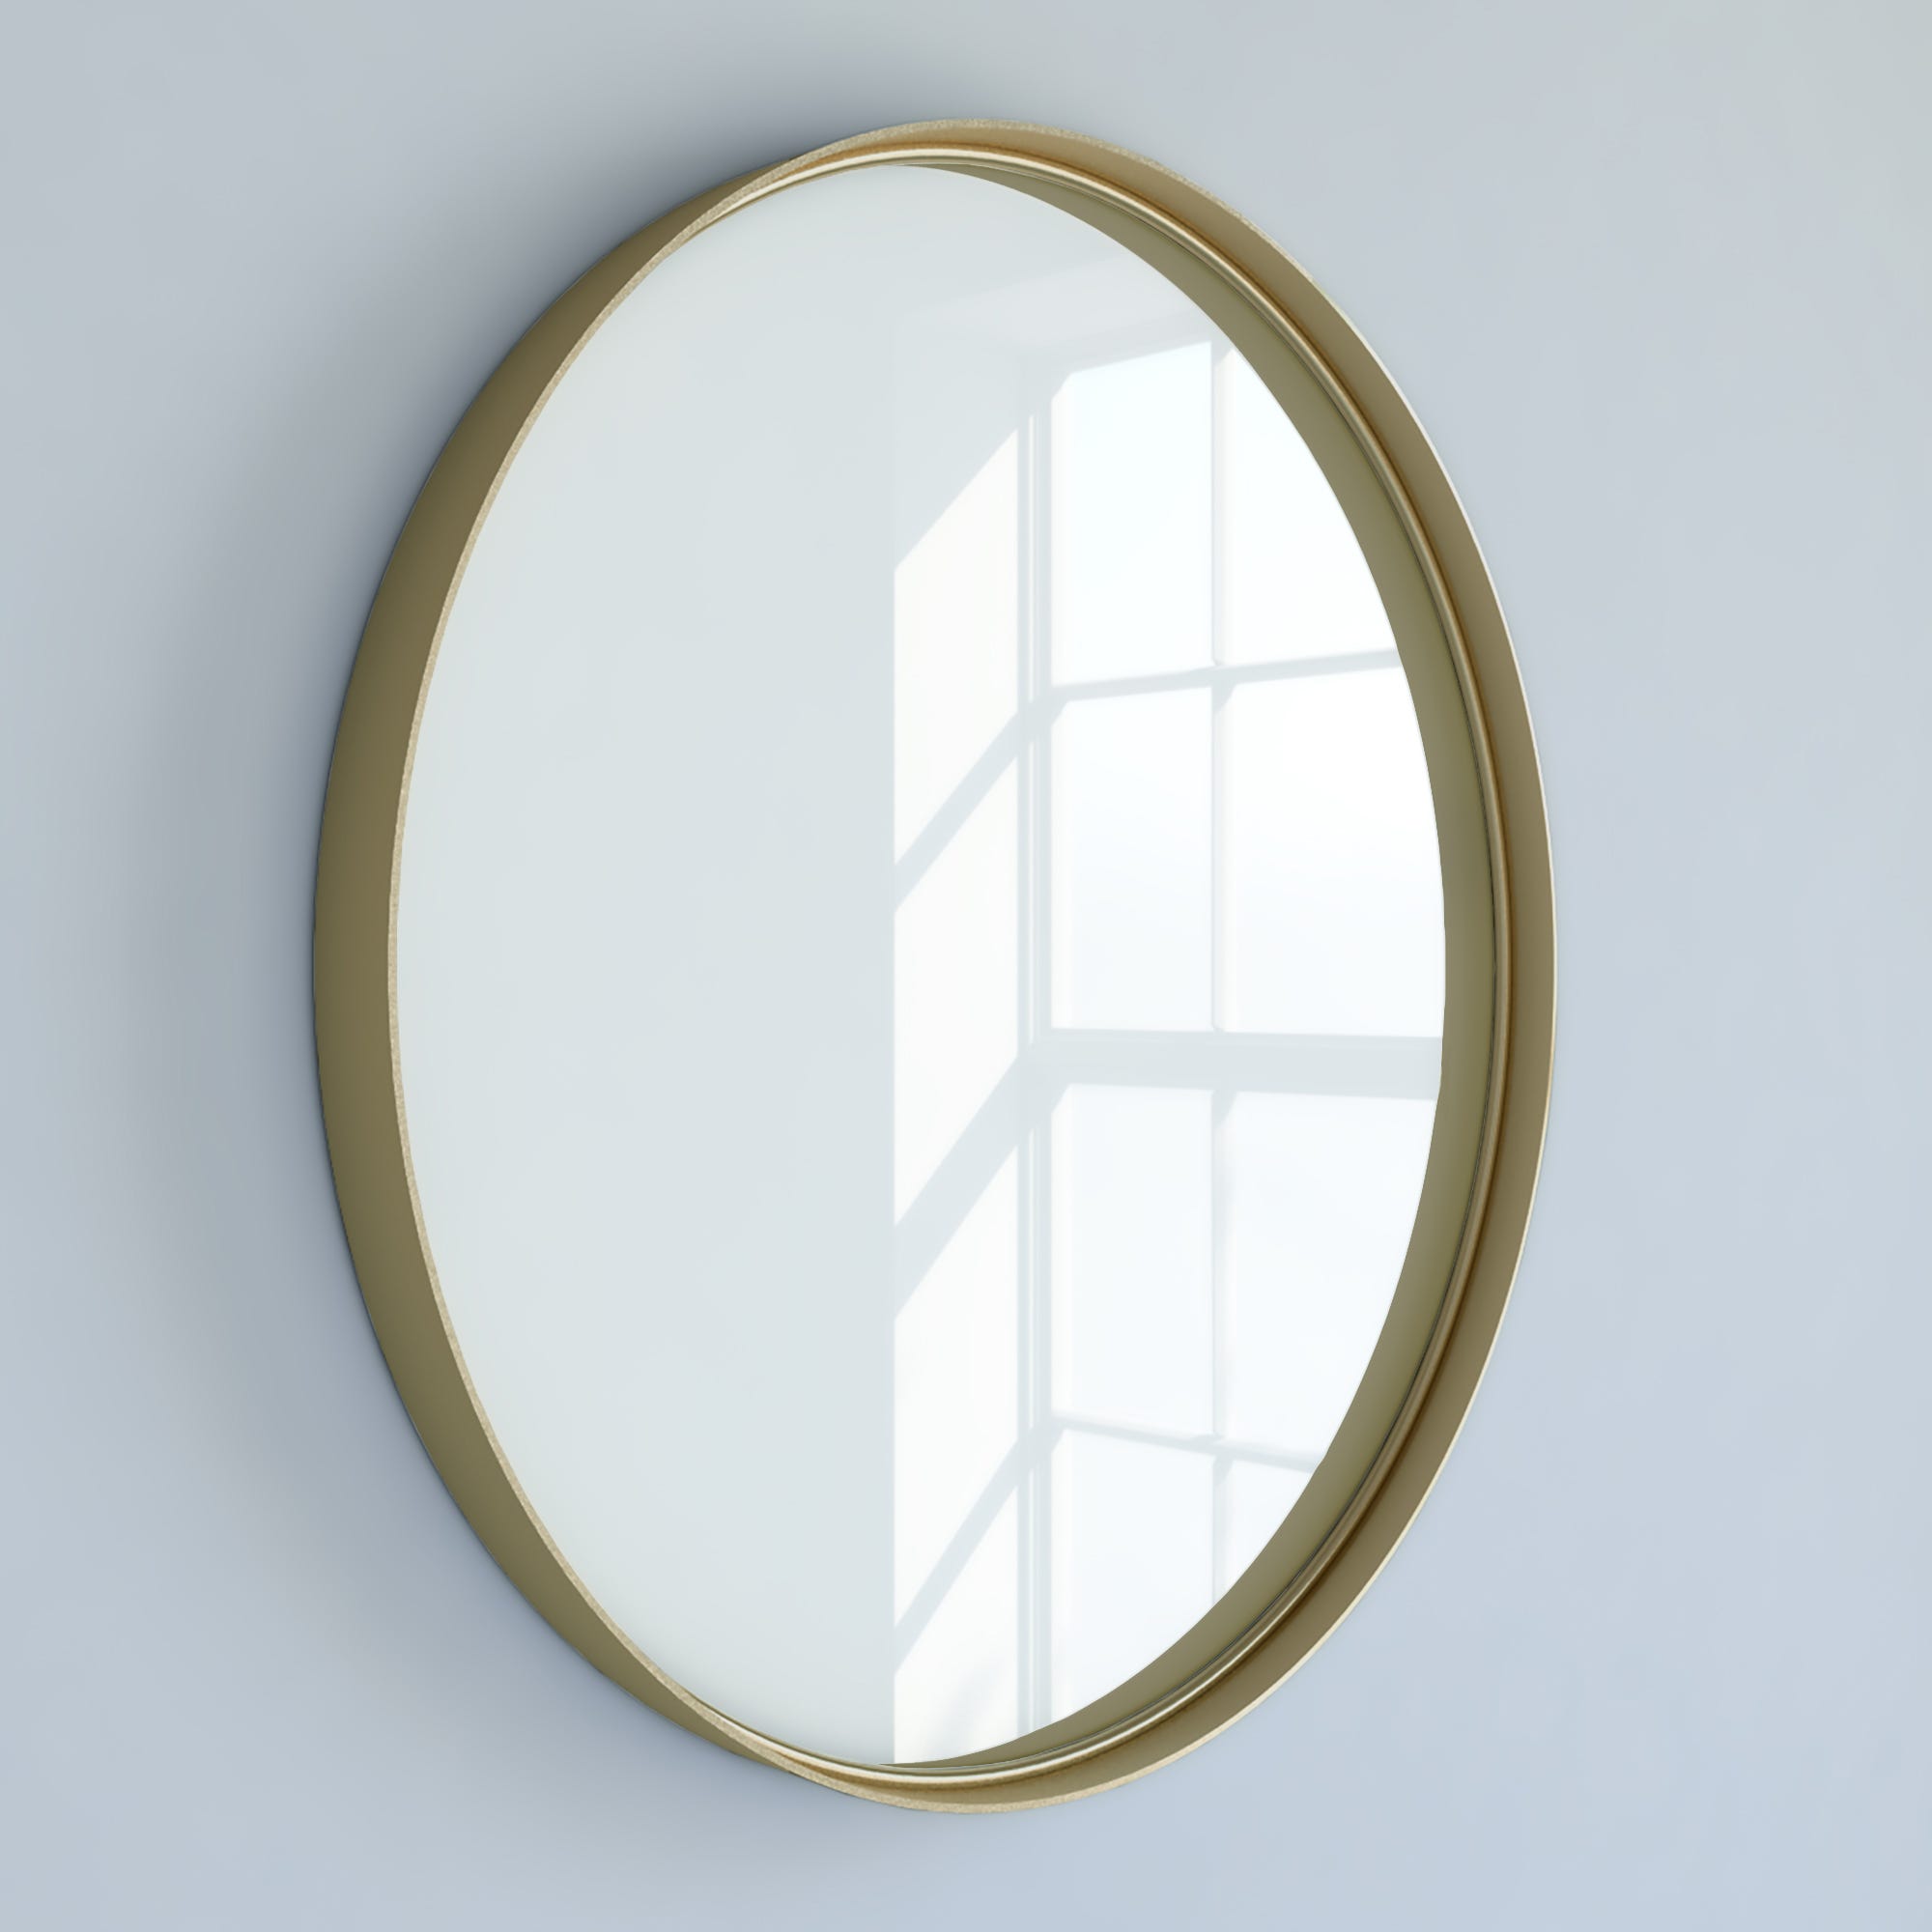 Espejo enmarcado rectangular Kende negro 60 x 80 cm